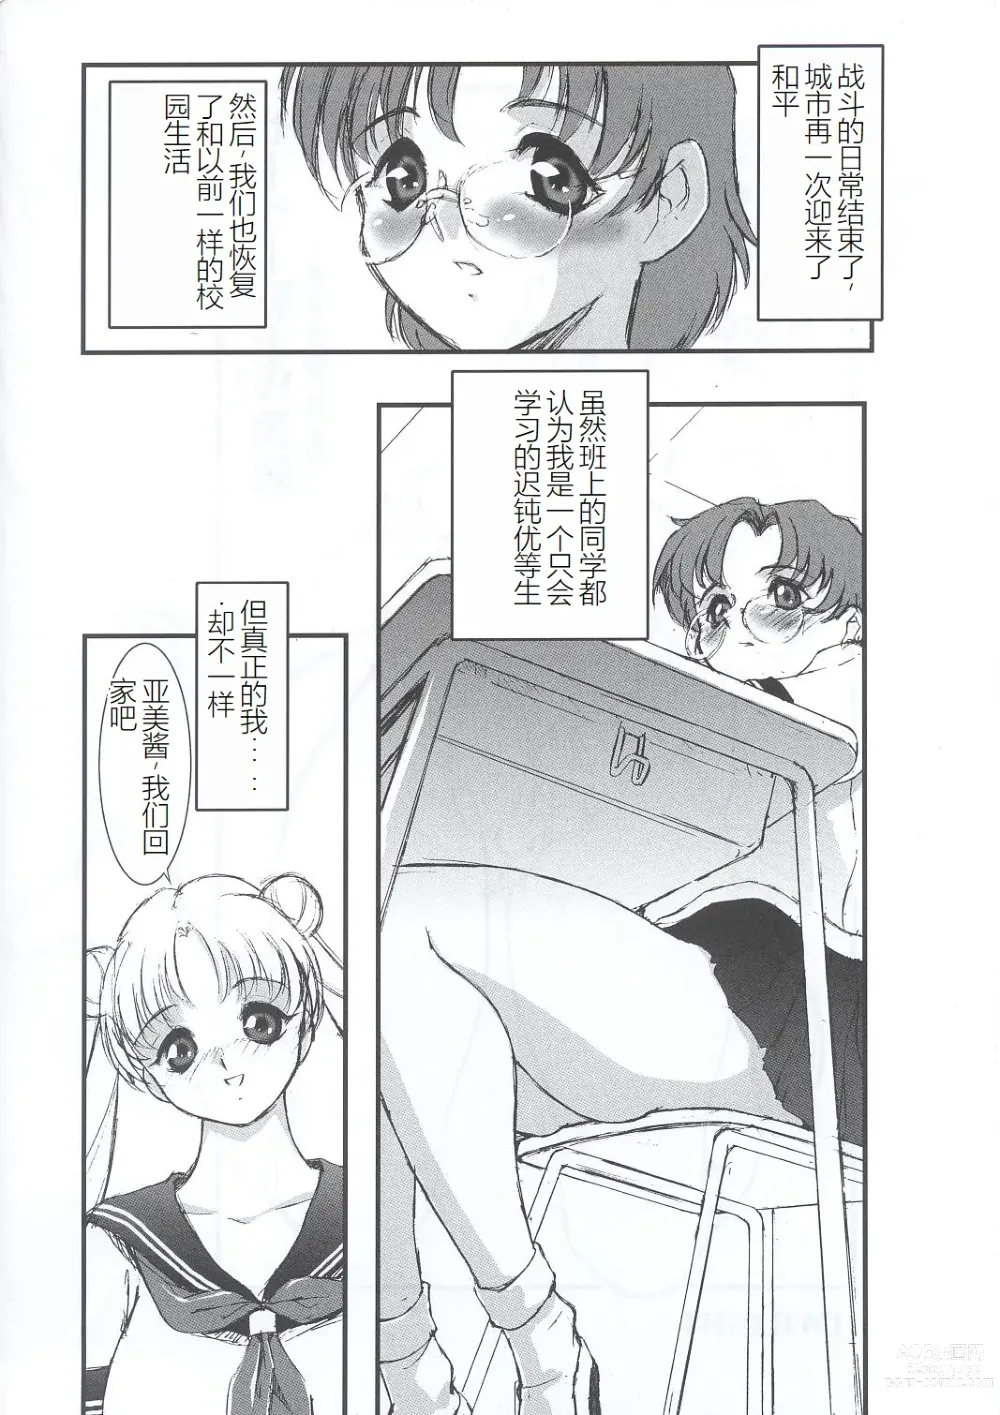 Page 7 of doujinshi SM